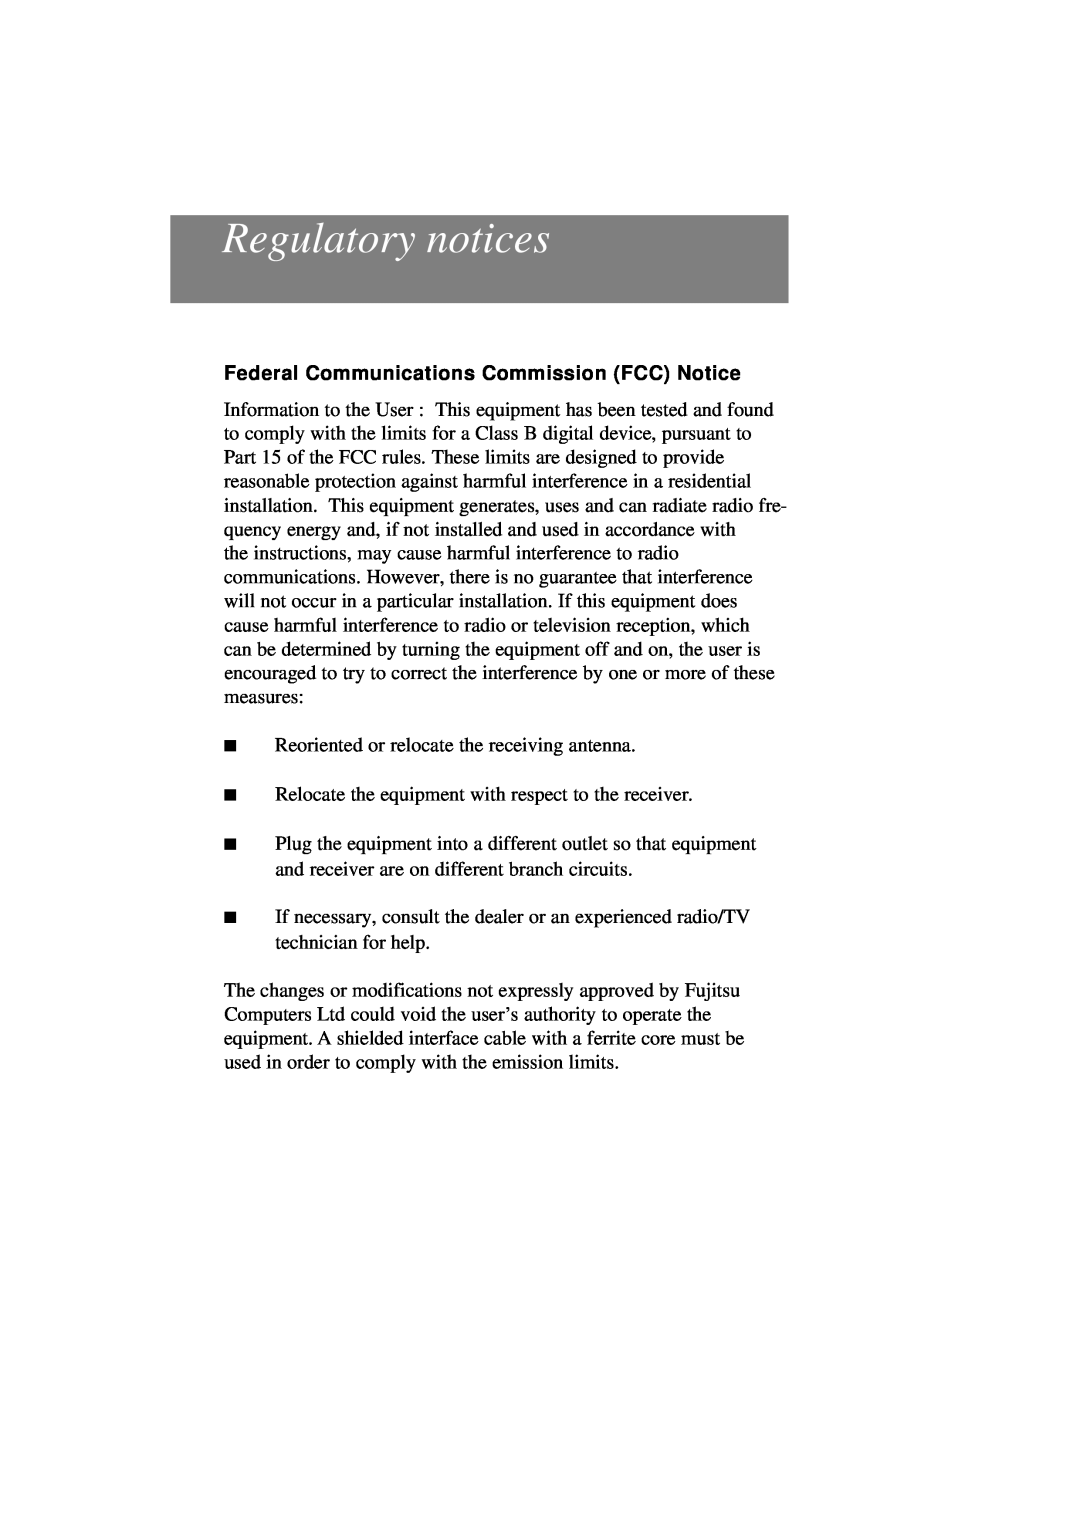 Fujitsu x178 manuel dutilisation Regulatory notices, Federal Communications Commission FCC Notice 